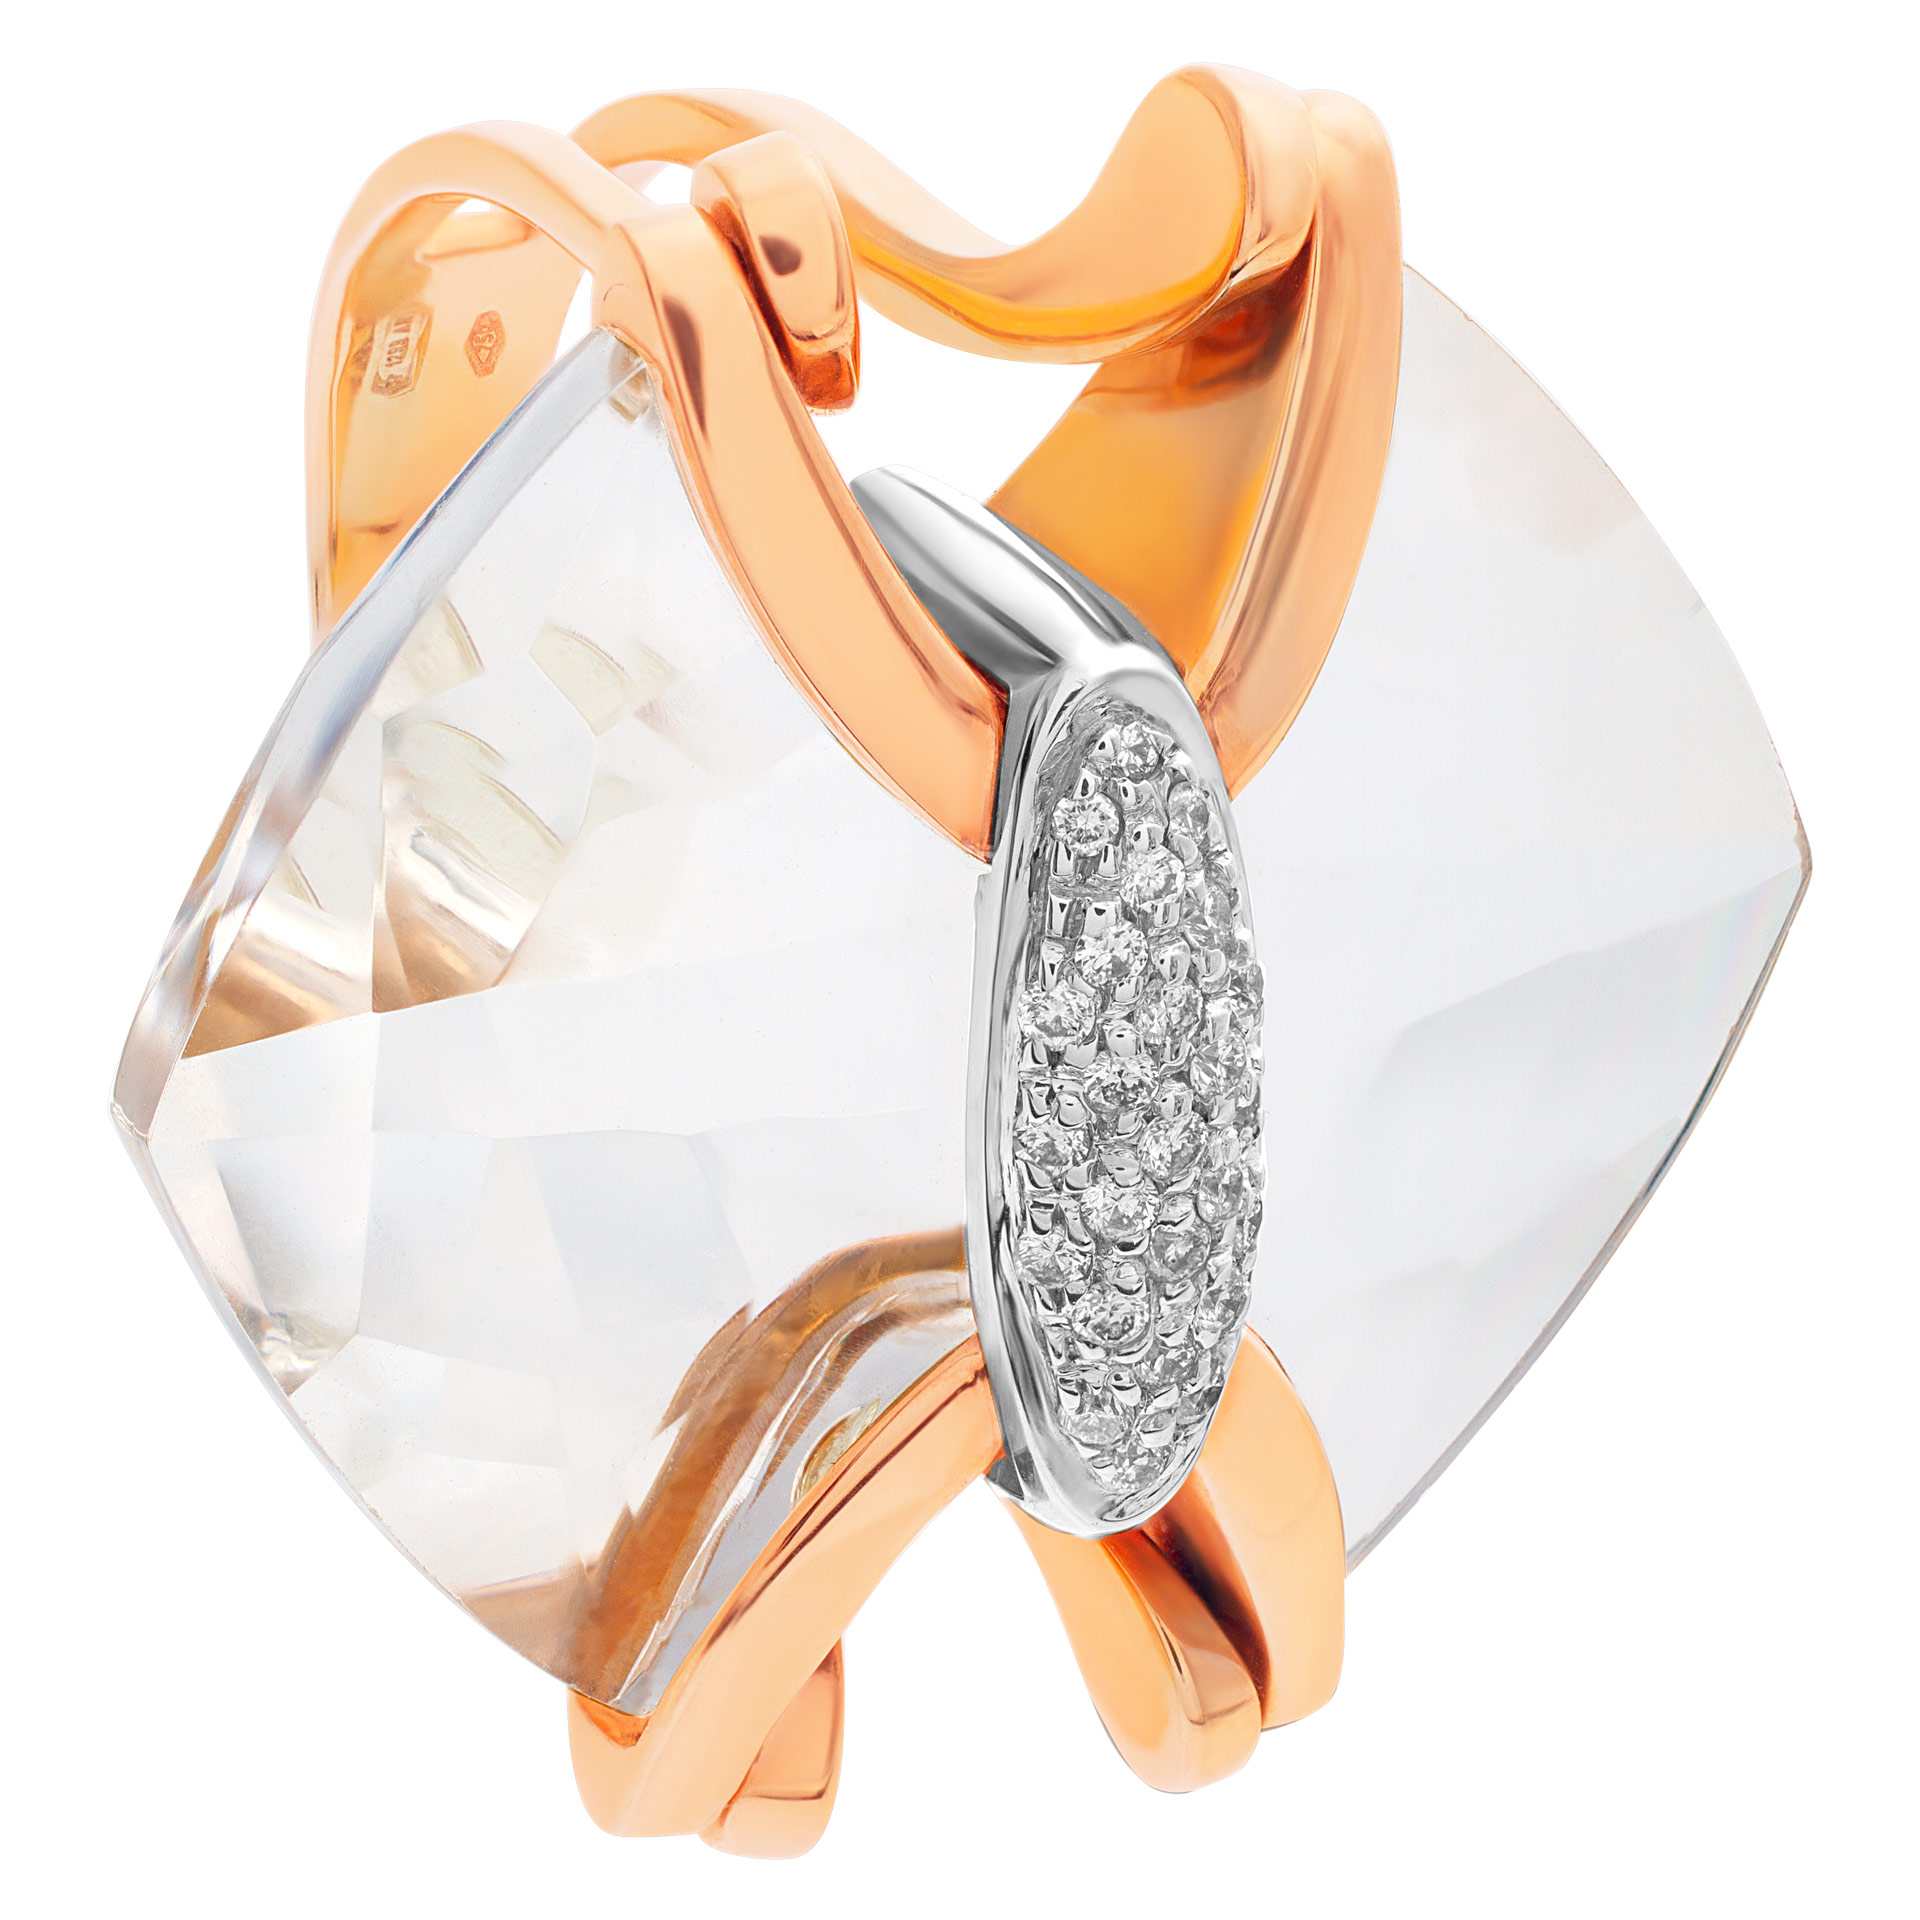 Mesmerizing quartz & diamonds ring by Italian designer "Falcinelli", w 17 carats "arrow"  shape cut quartz & diamonds. image 3